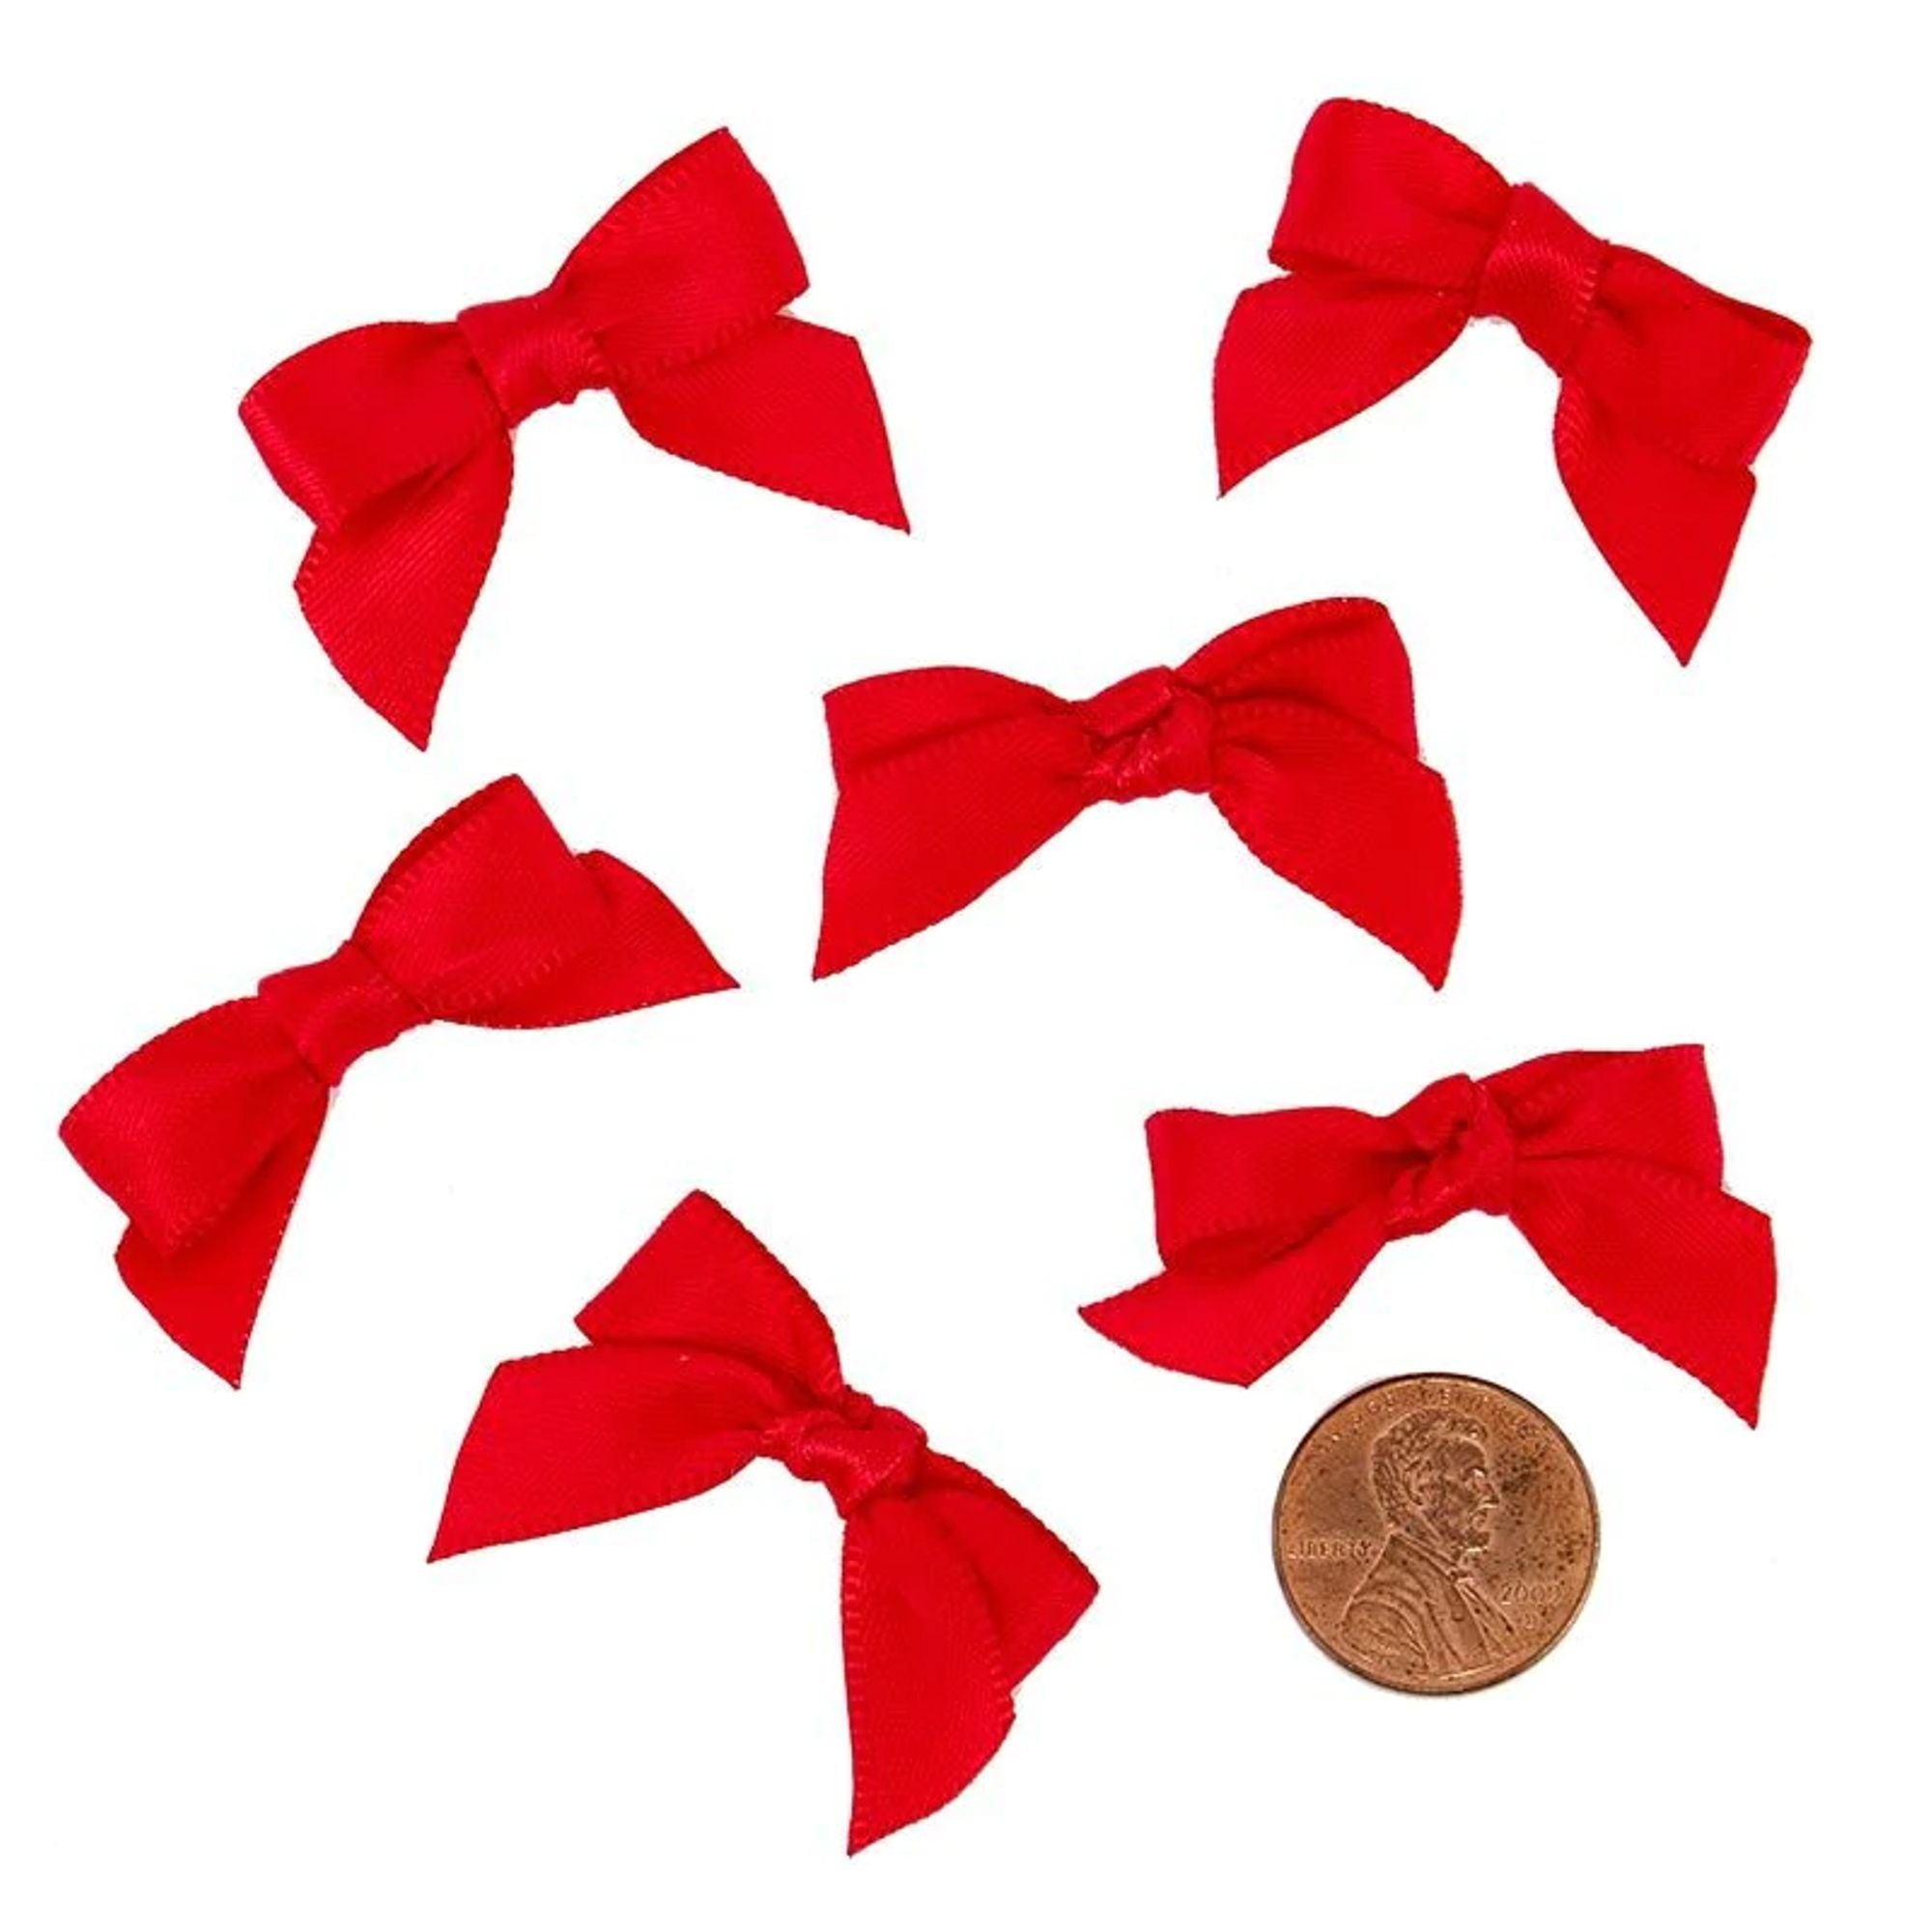 Mini Red Satin Bows - 1 3/8 in. x 1in. - 50 Pack (601330)